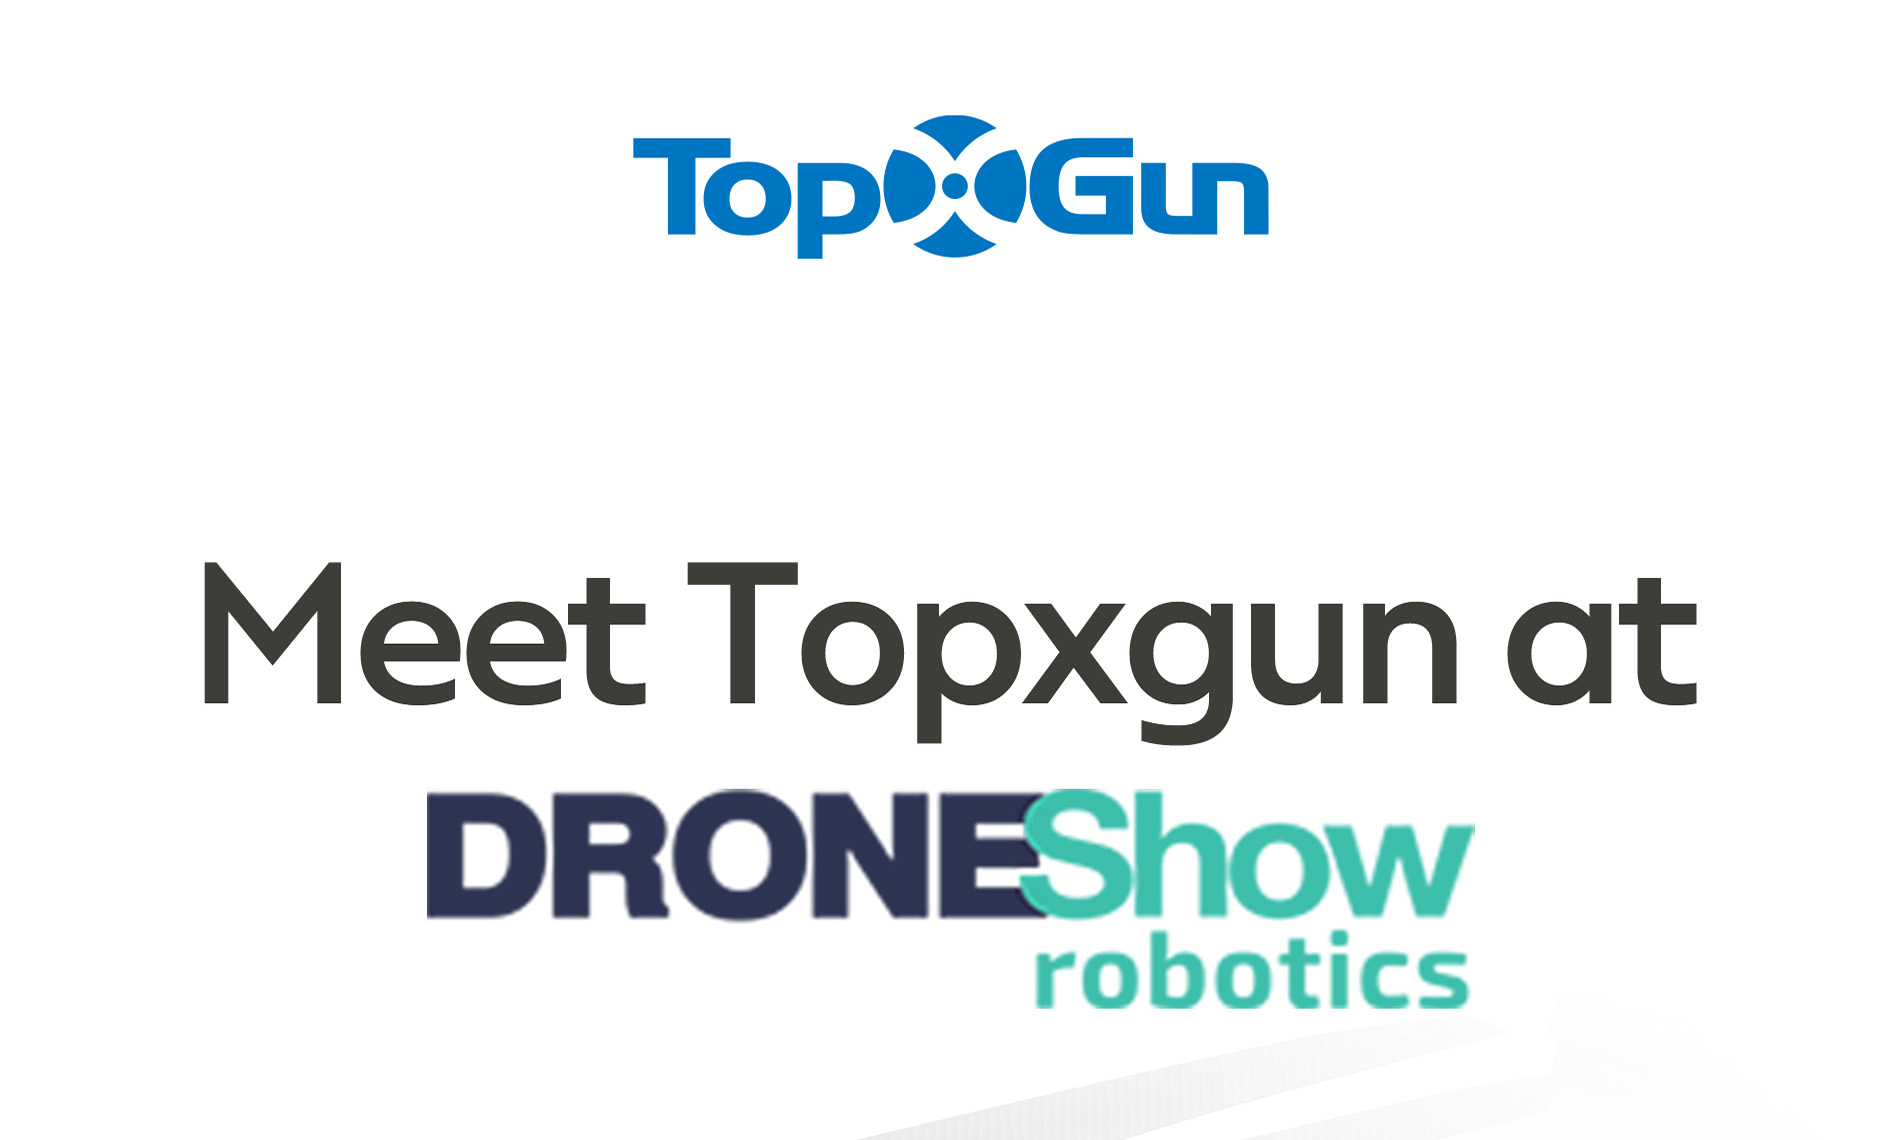 ¡Conoce a Topxgun en DroneShow en Sao Paulo, Brasil!